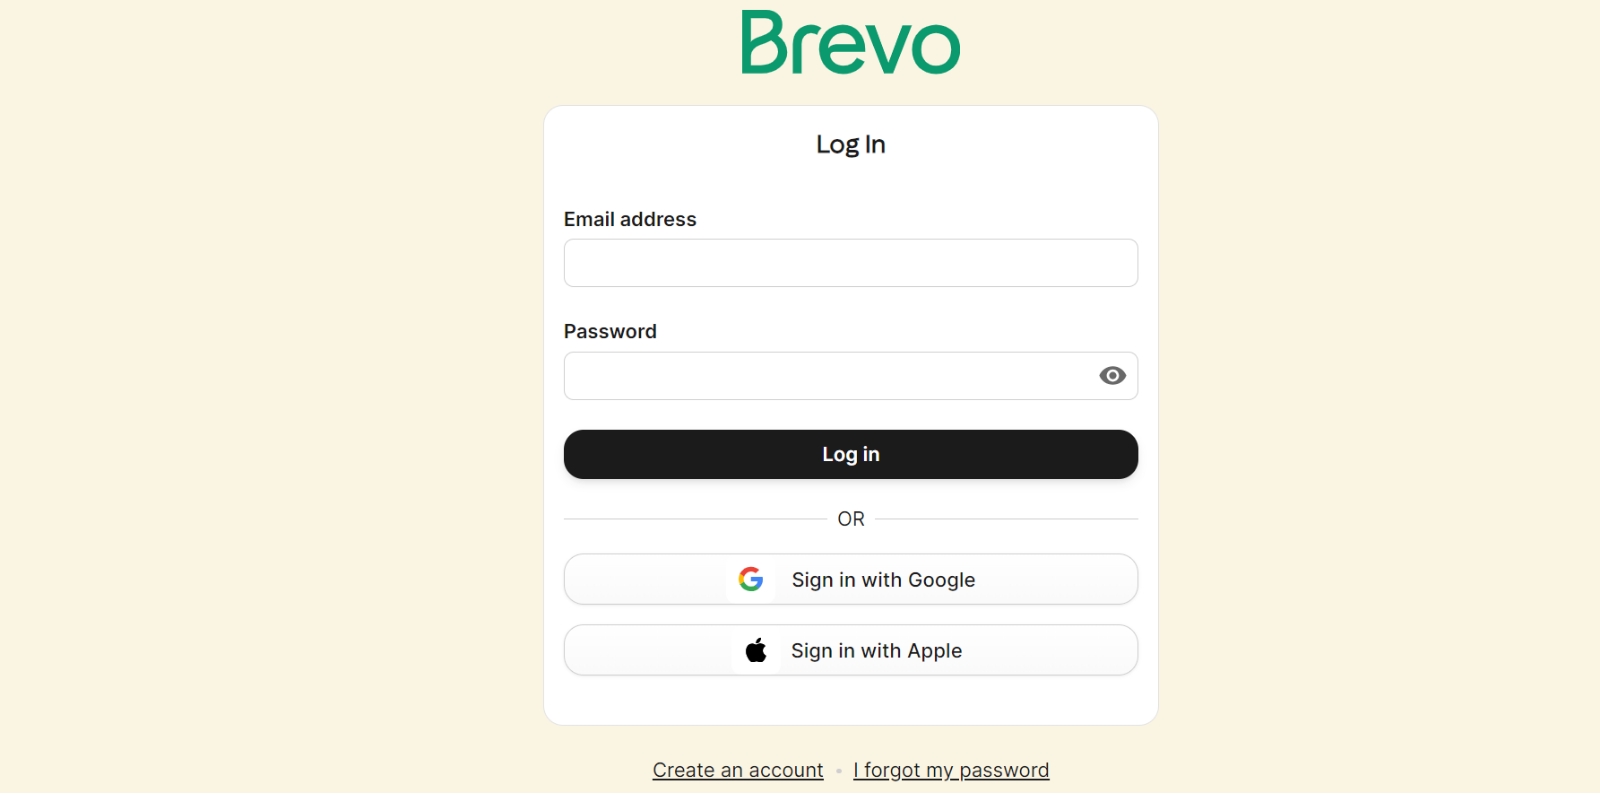 Brevo website and log in